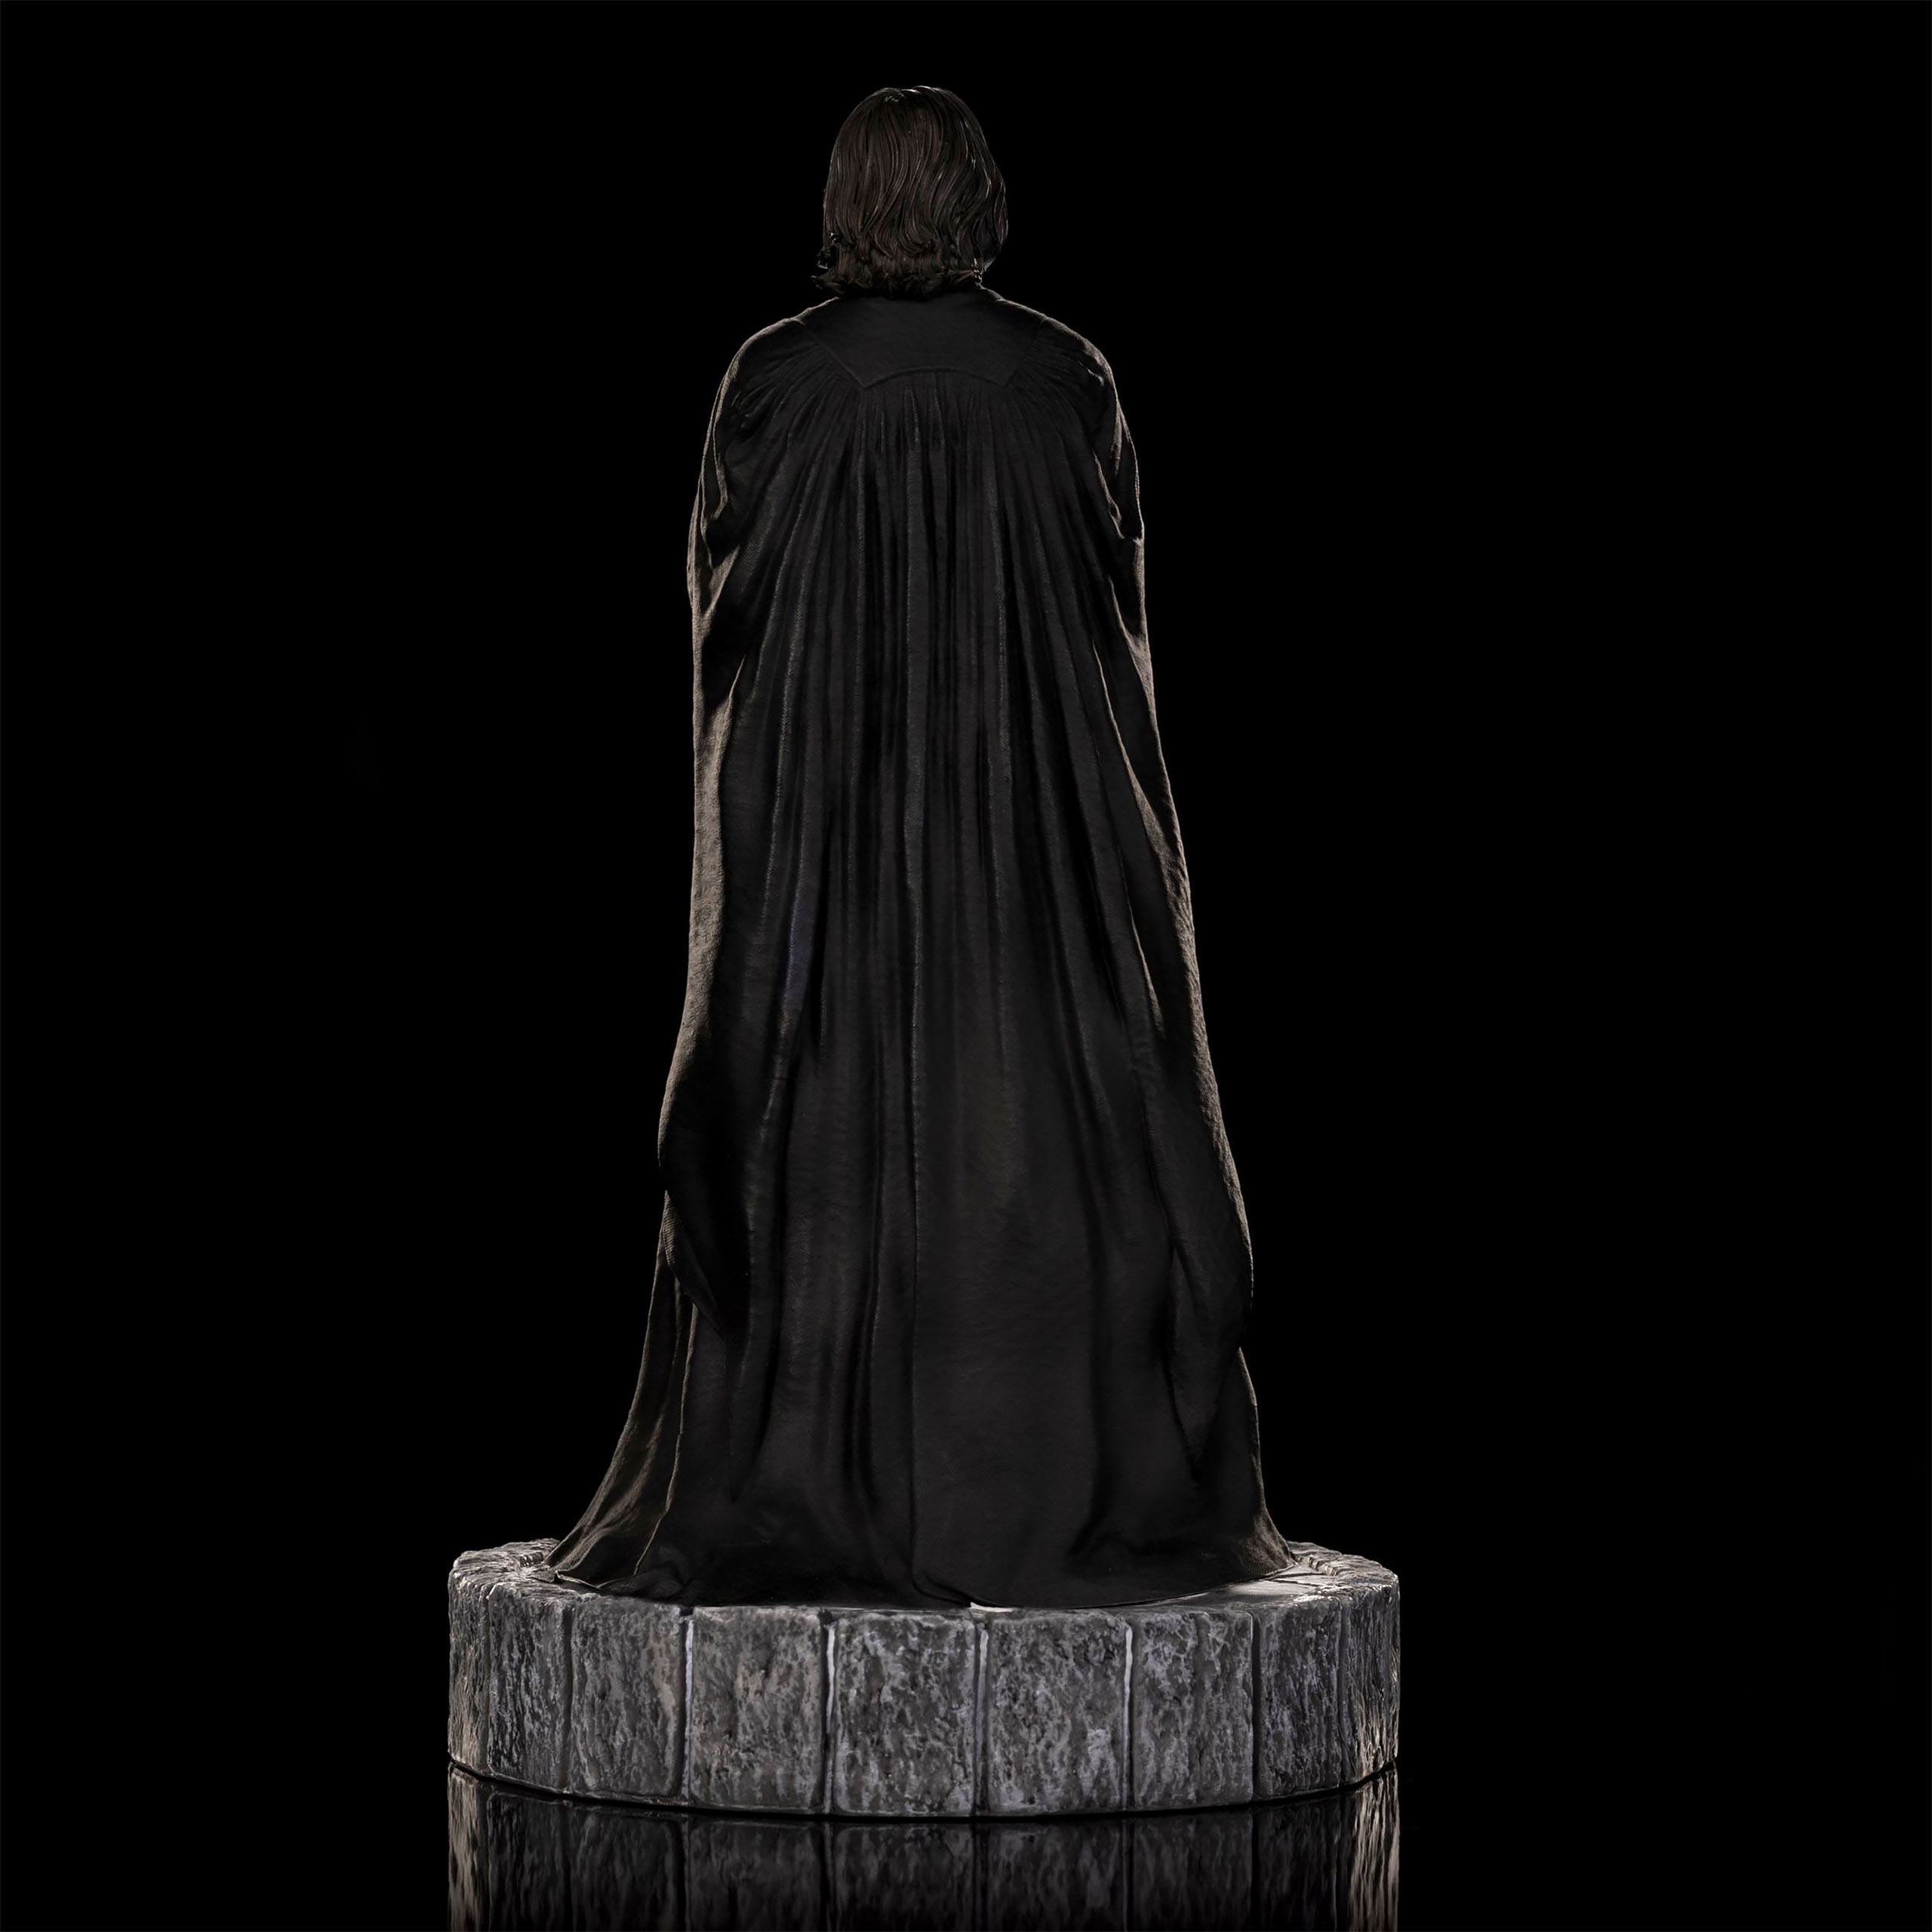 Harry Potter - Severus Snape Art Scale Statue 1:10